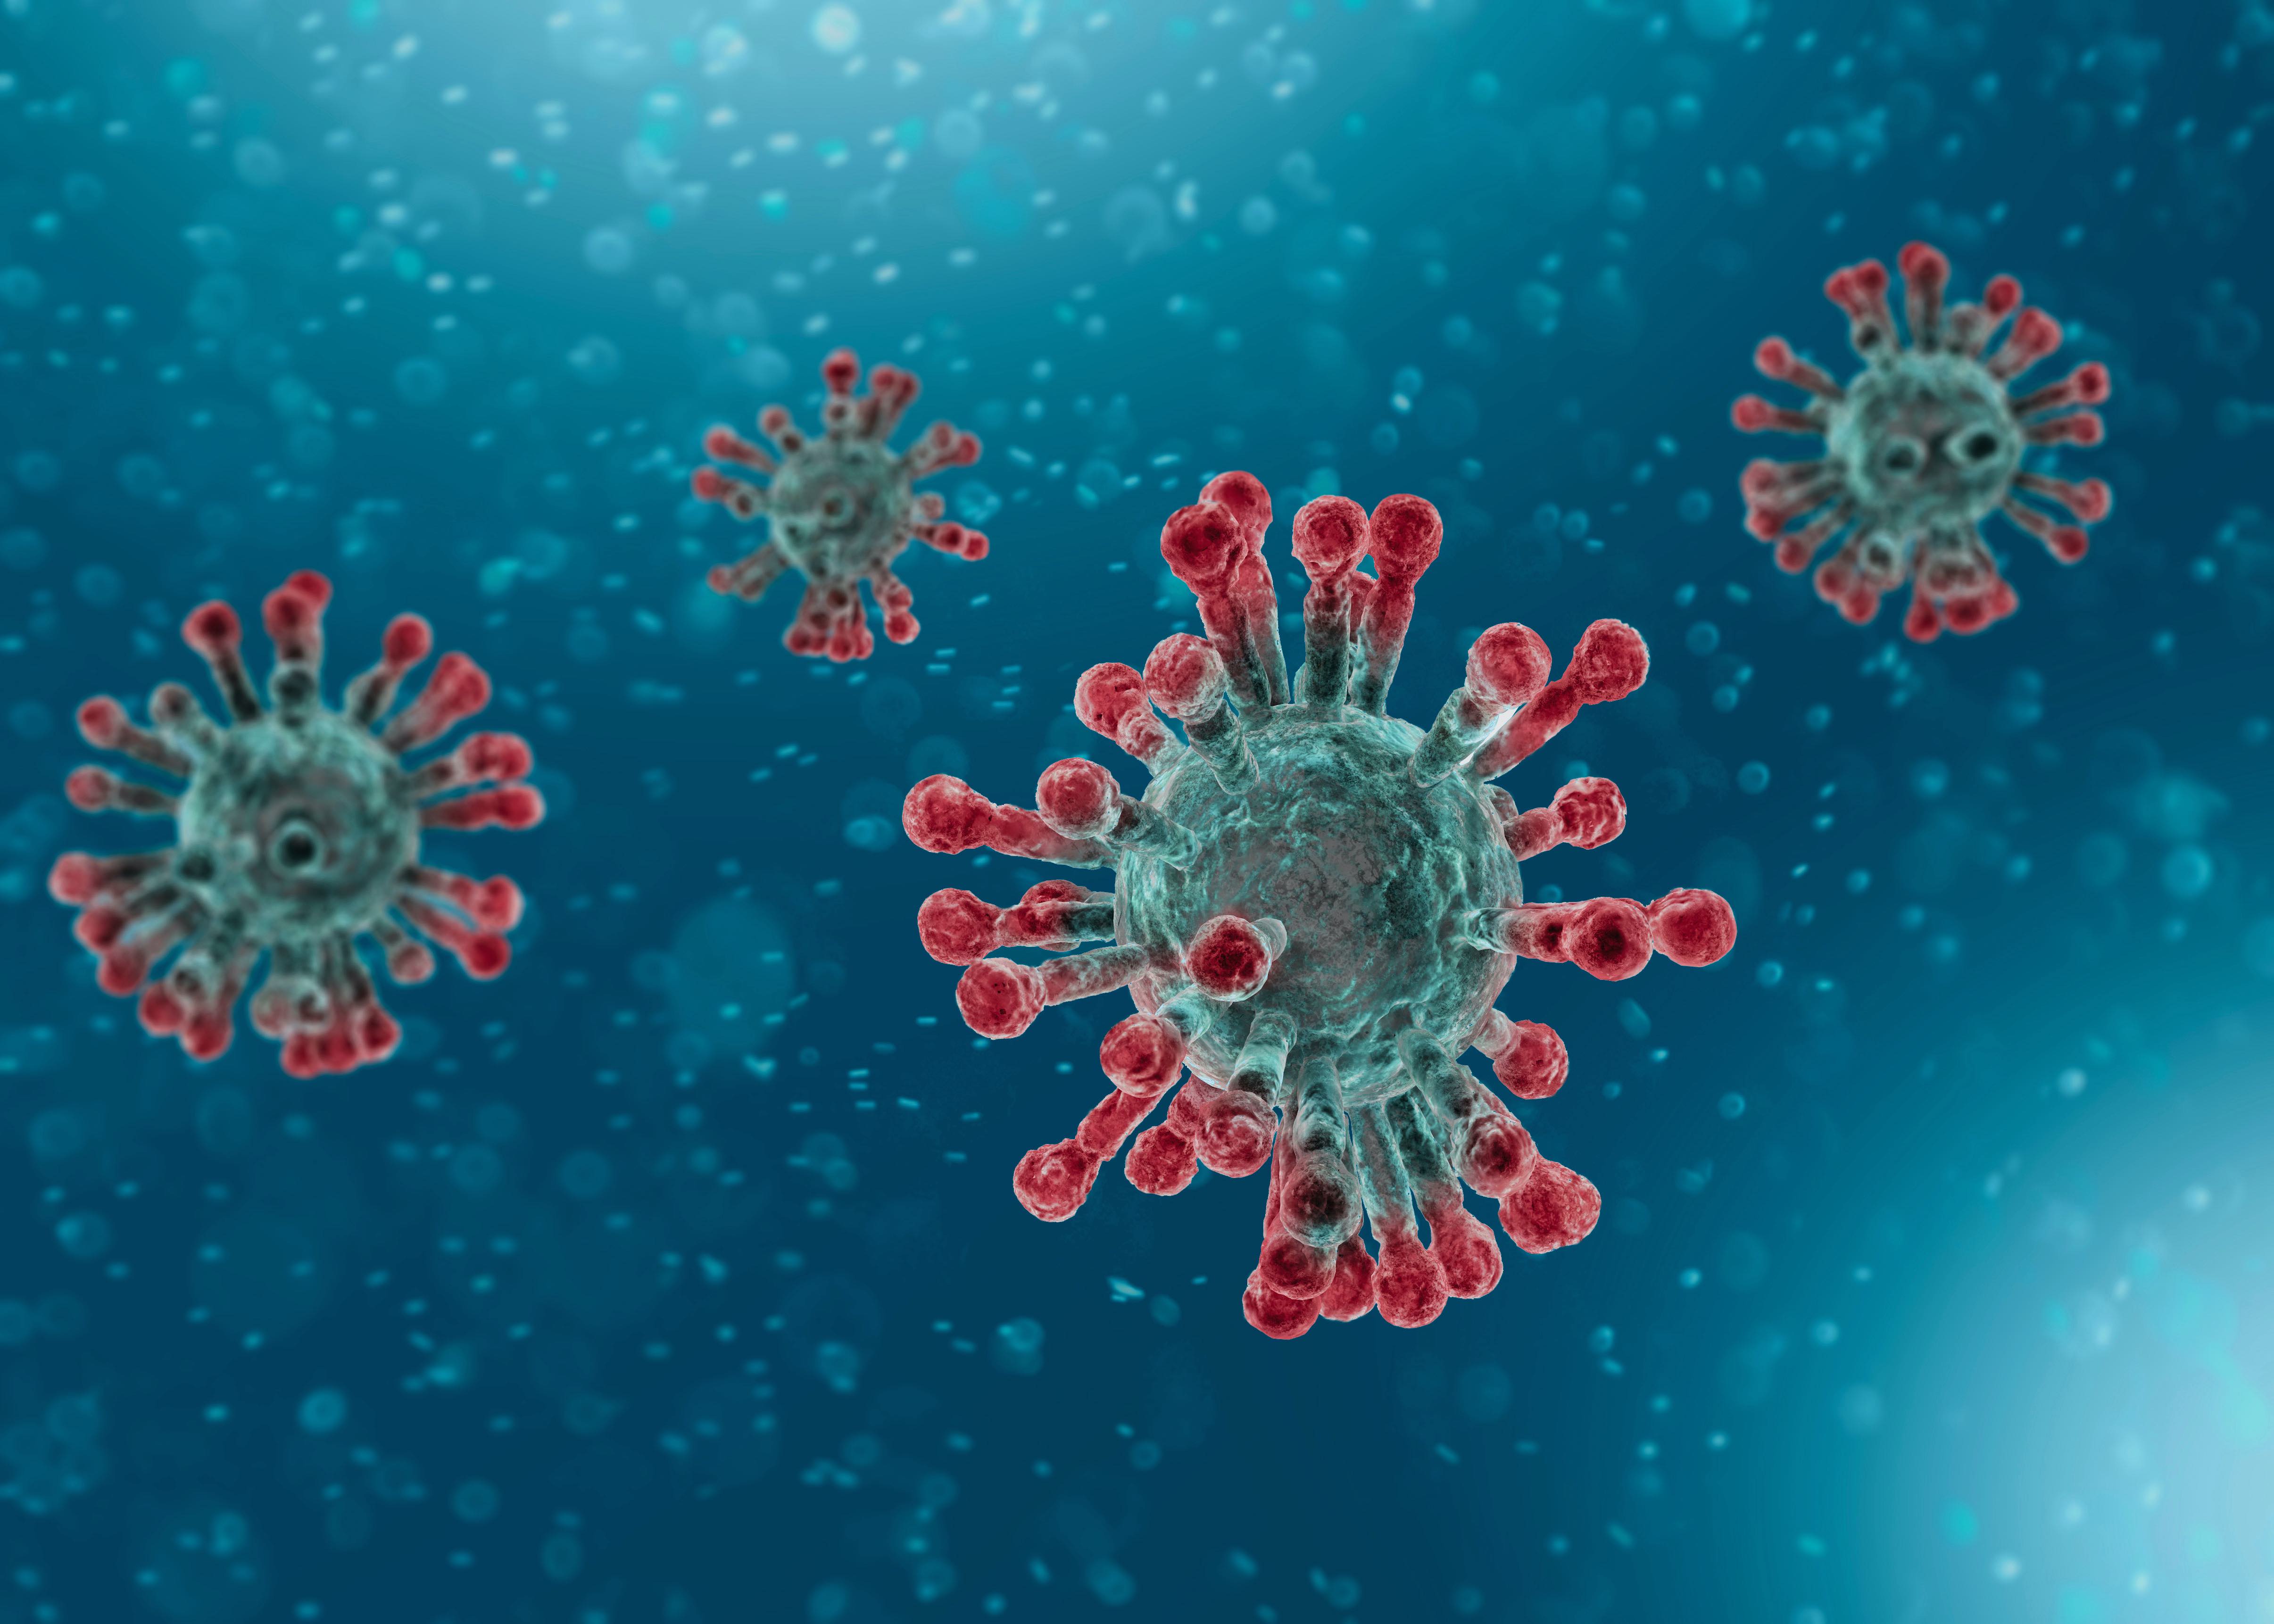 Changing Times and the Coronavirus Pandemic